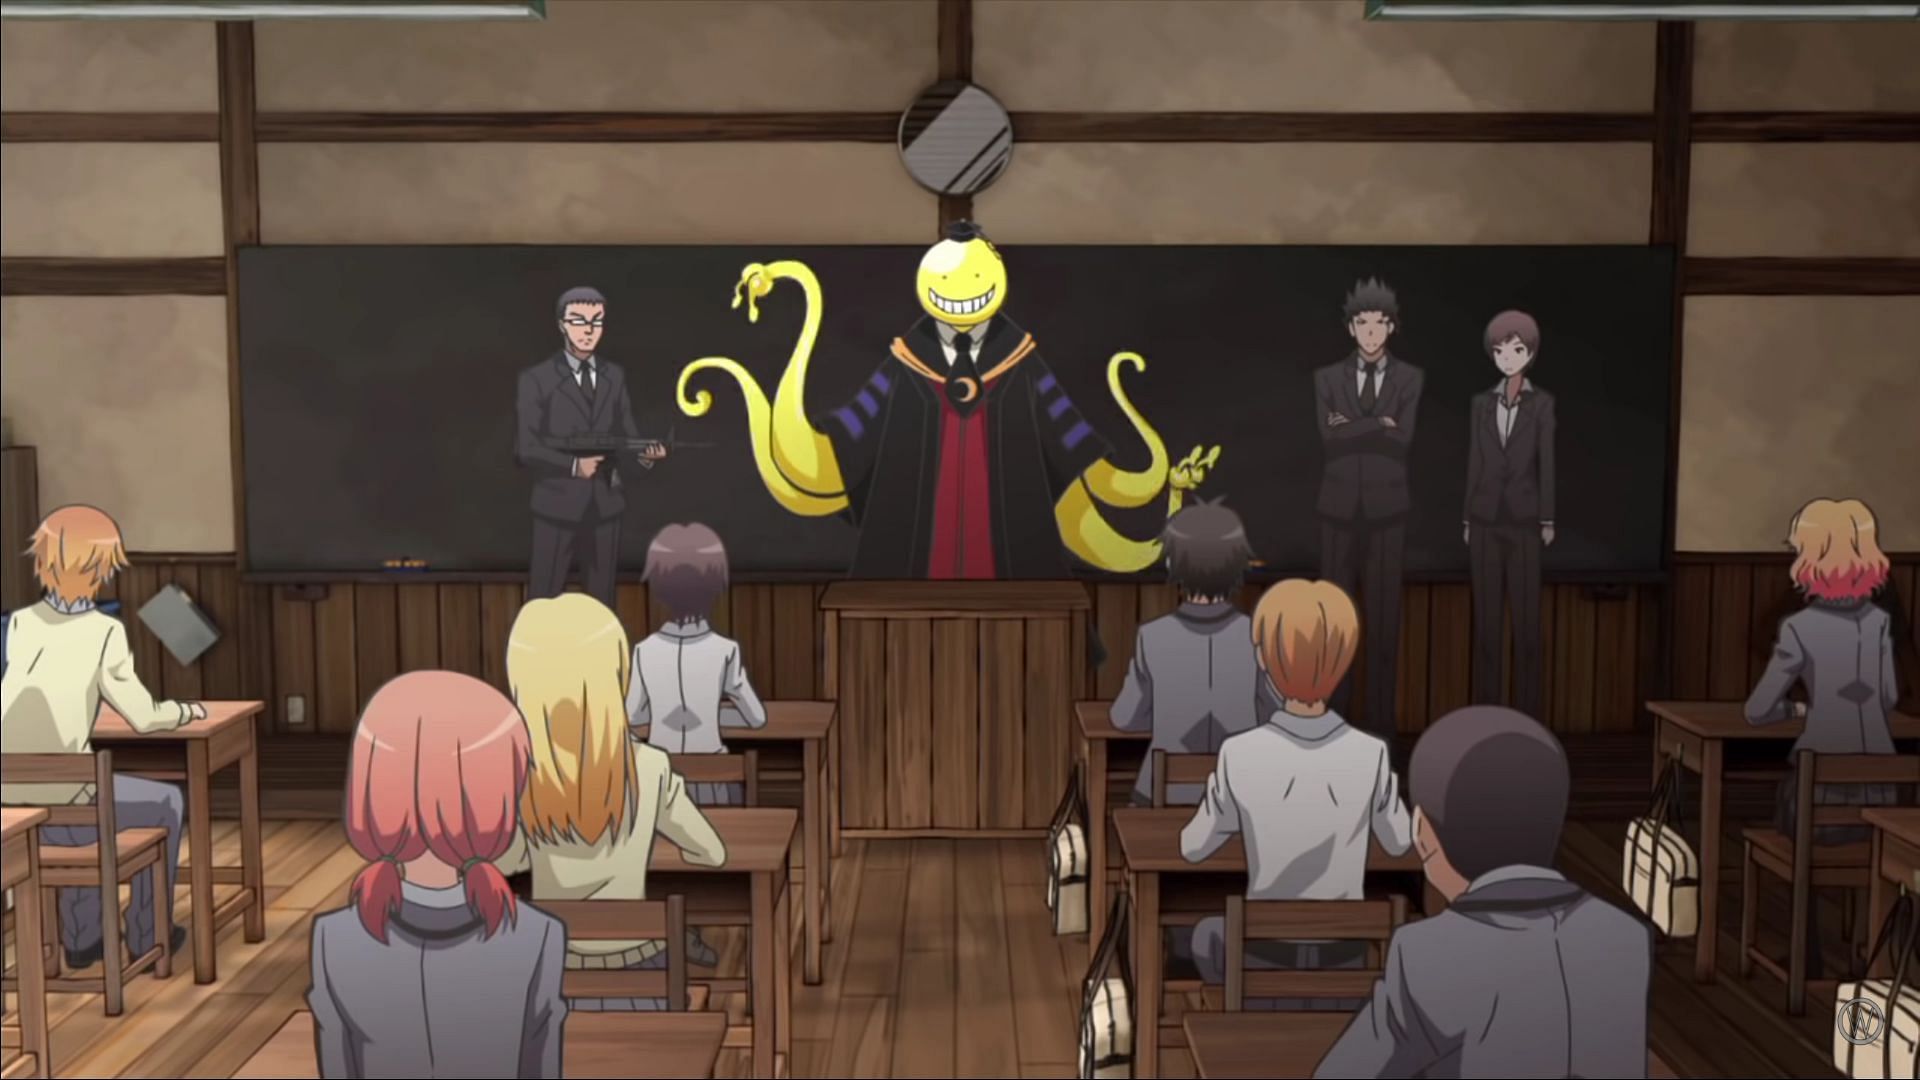 Demon Koro Sensei (Anime: Assassination Classroom) by